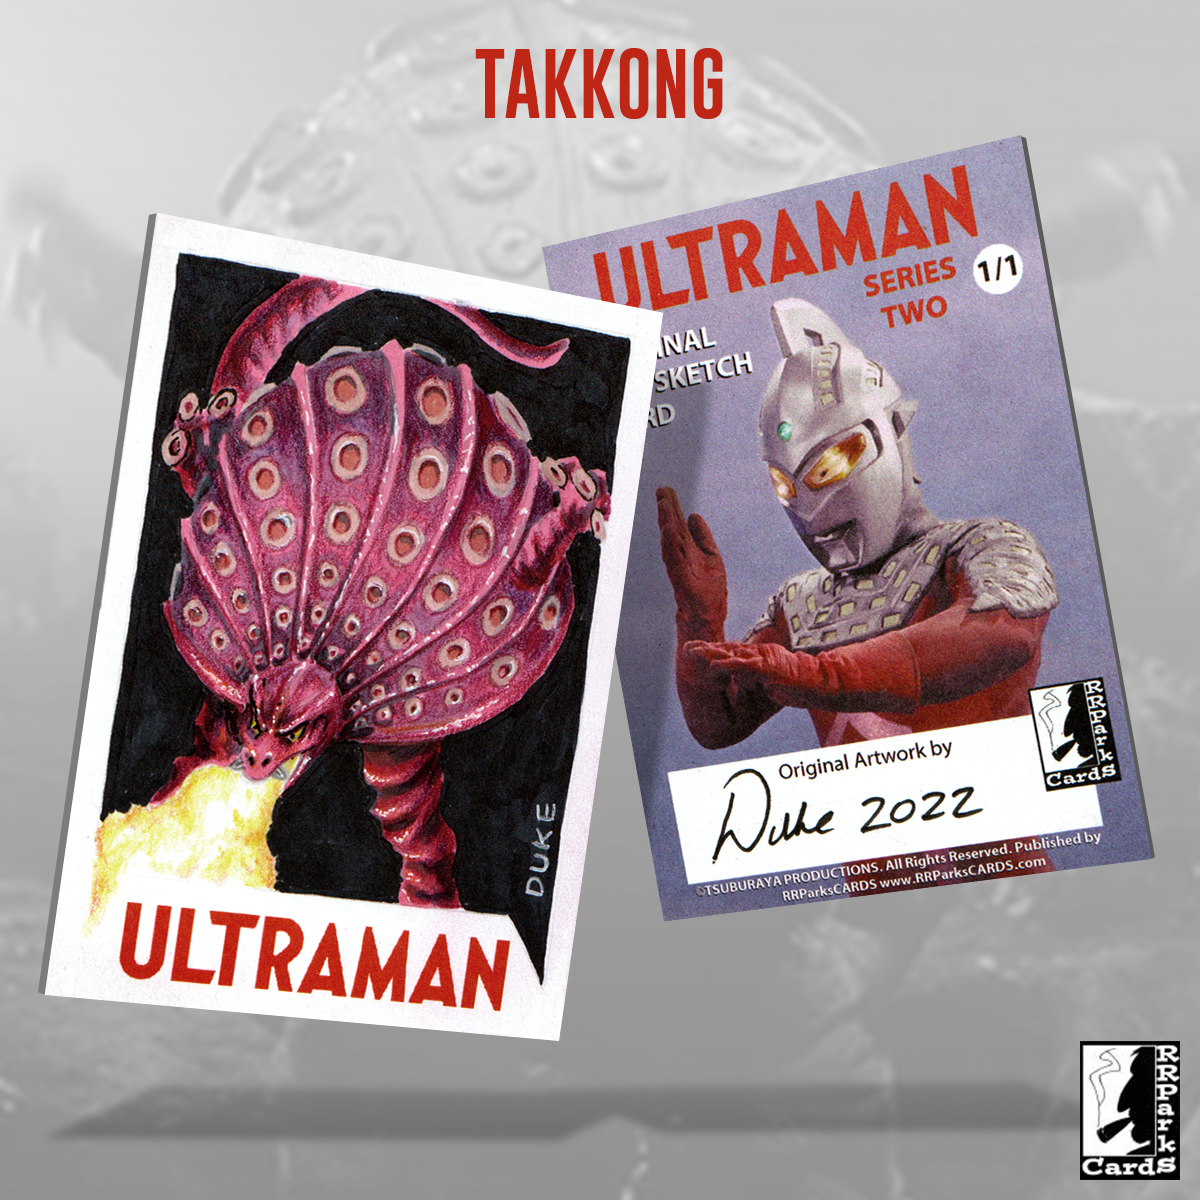 Ultraman Series 2 Takkong Sketch Cover by Duke